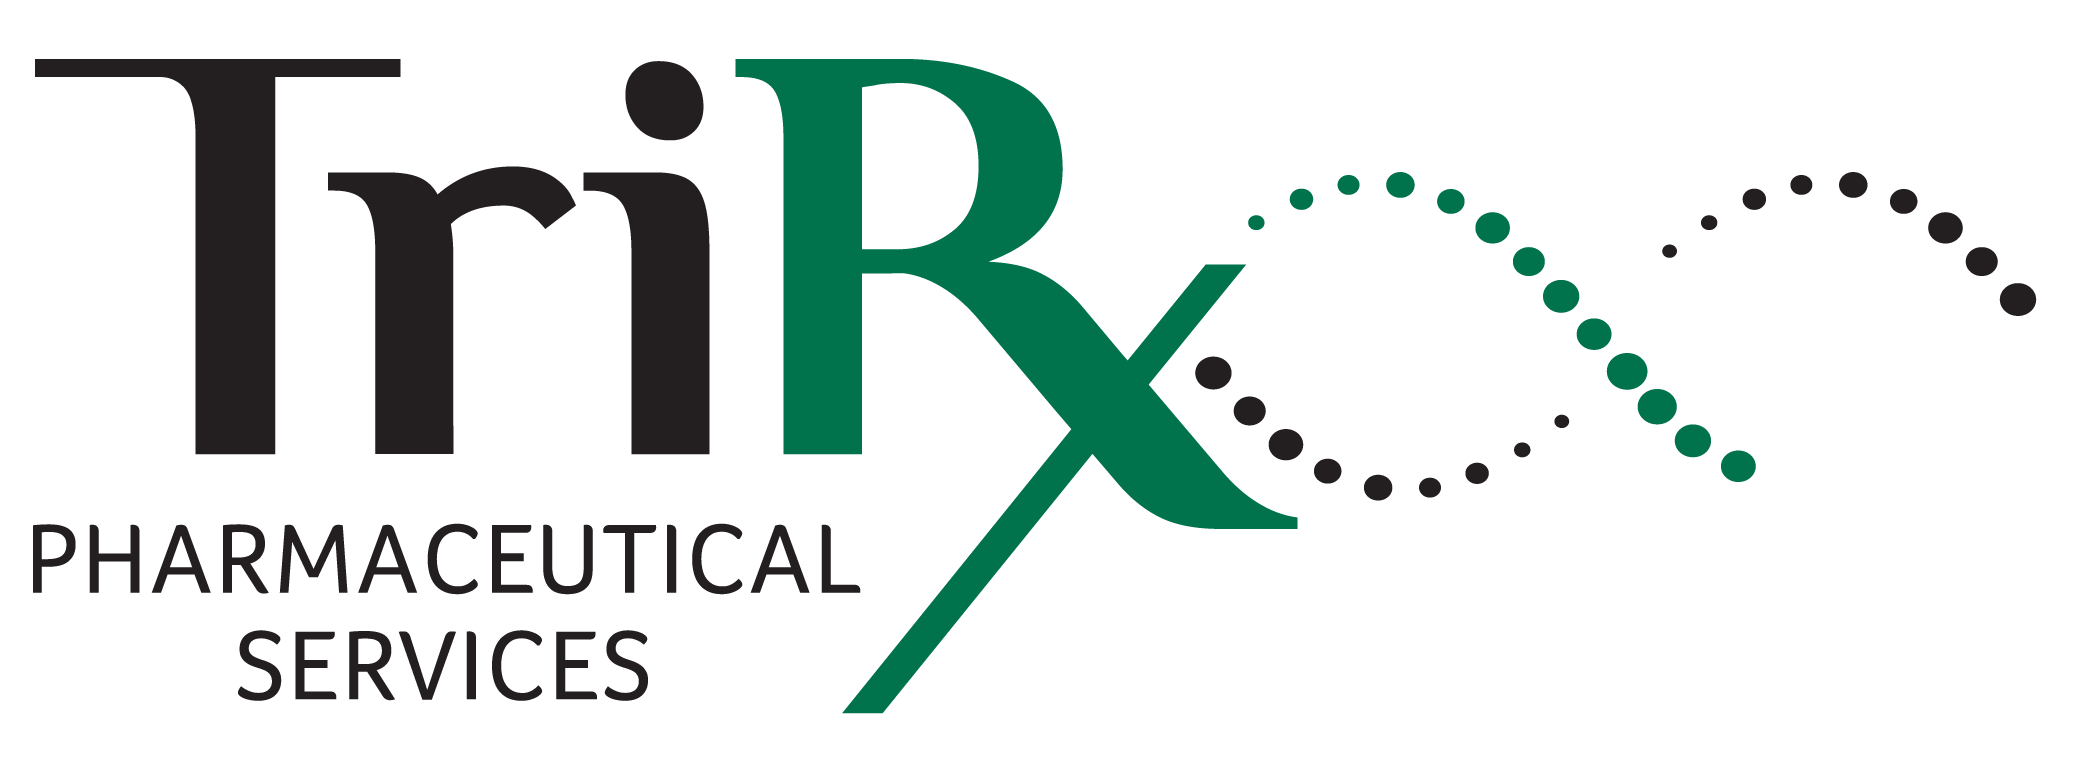 TriRX_logo